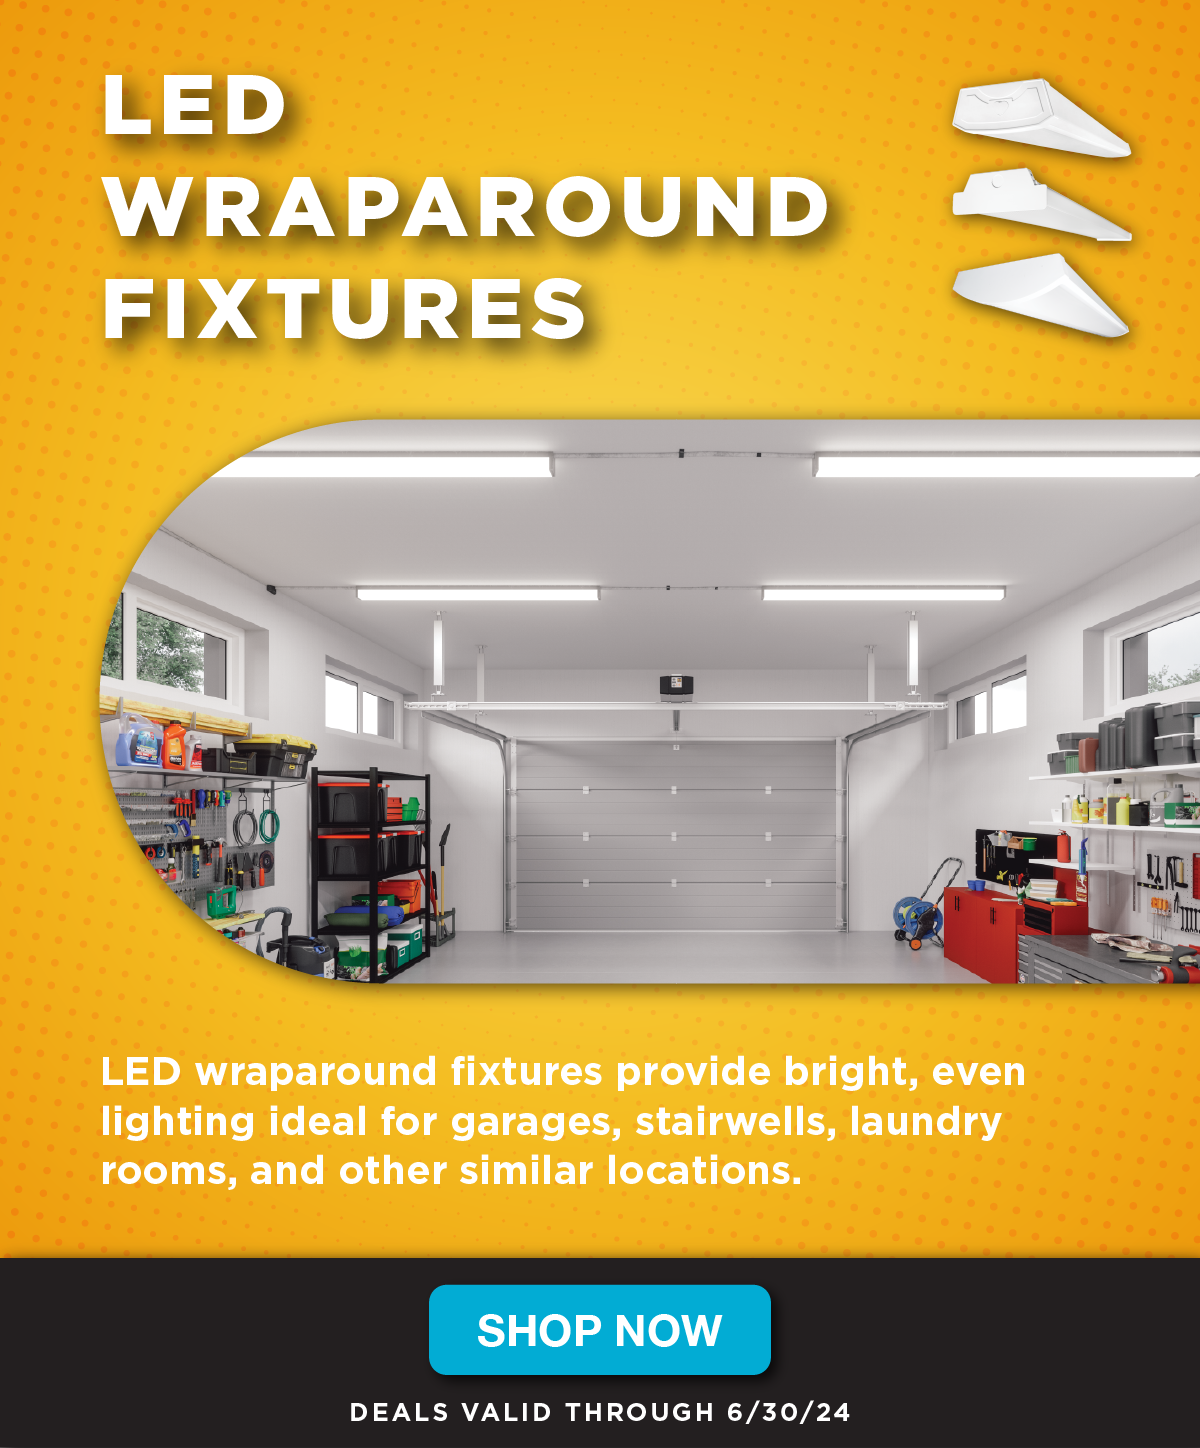 LED Wraparound Fixtures